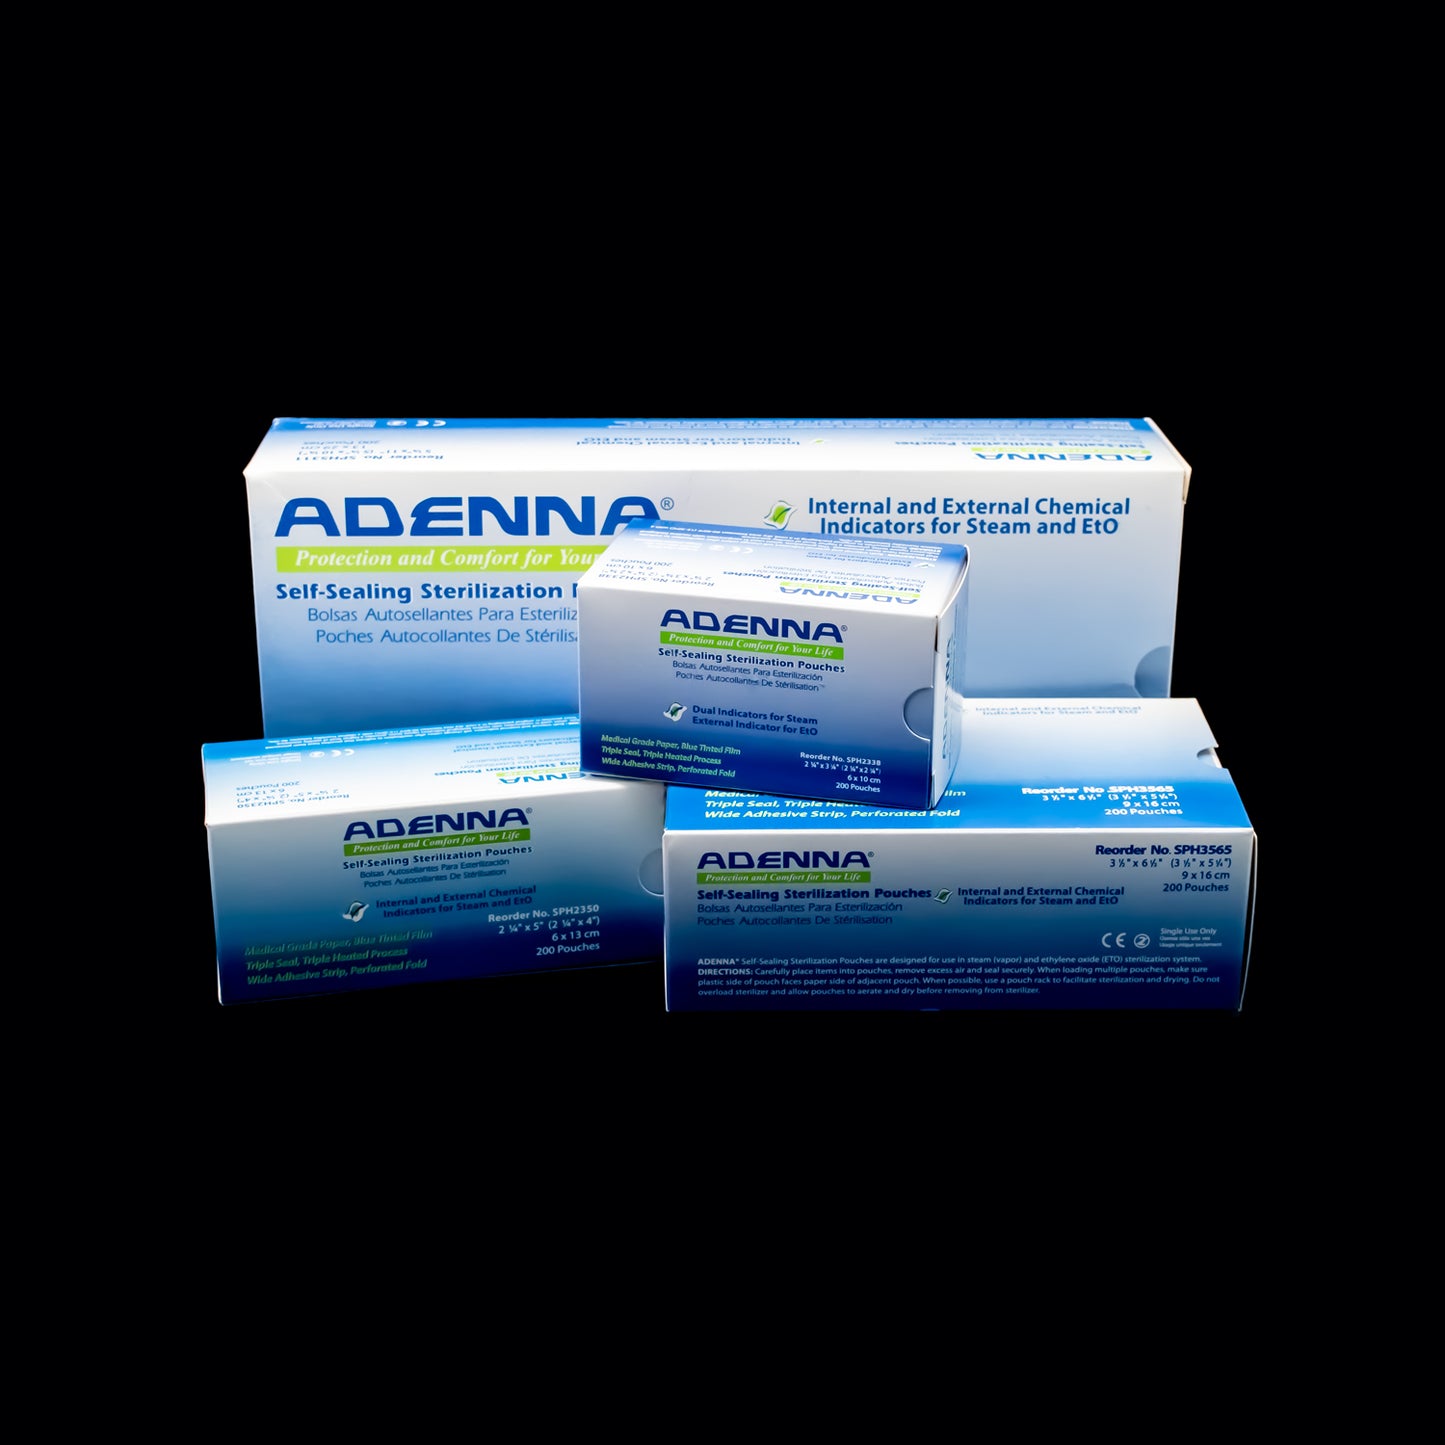 ADENNA® SELF-SEALING STERILIZATION POUCHES